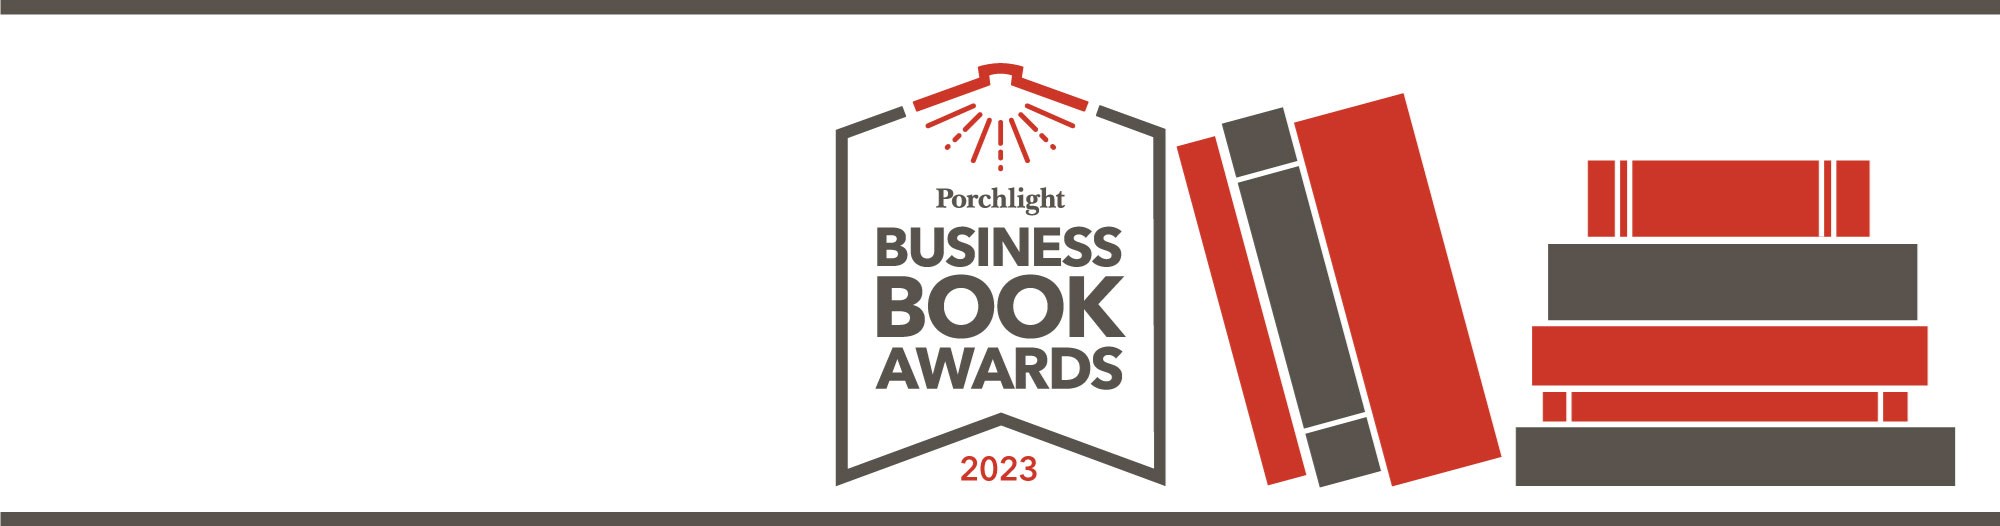 The 2023 Porchlight Business Book Awards